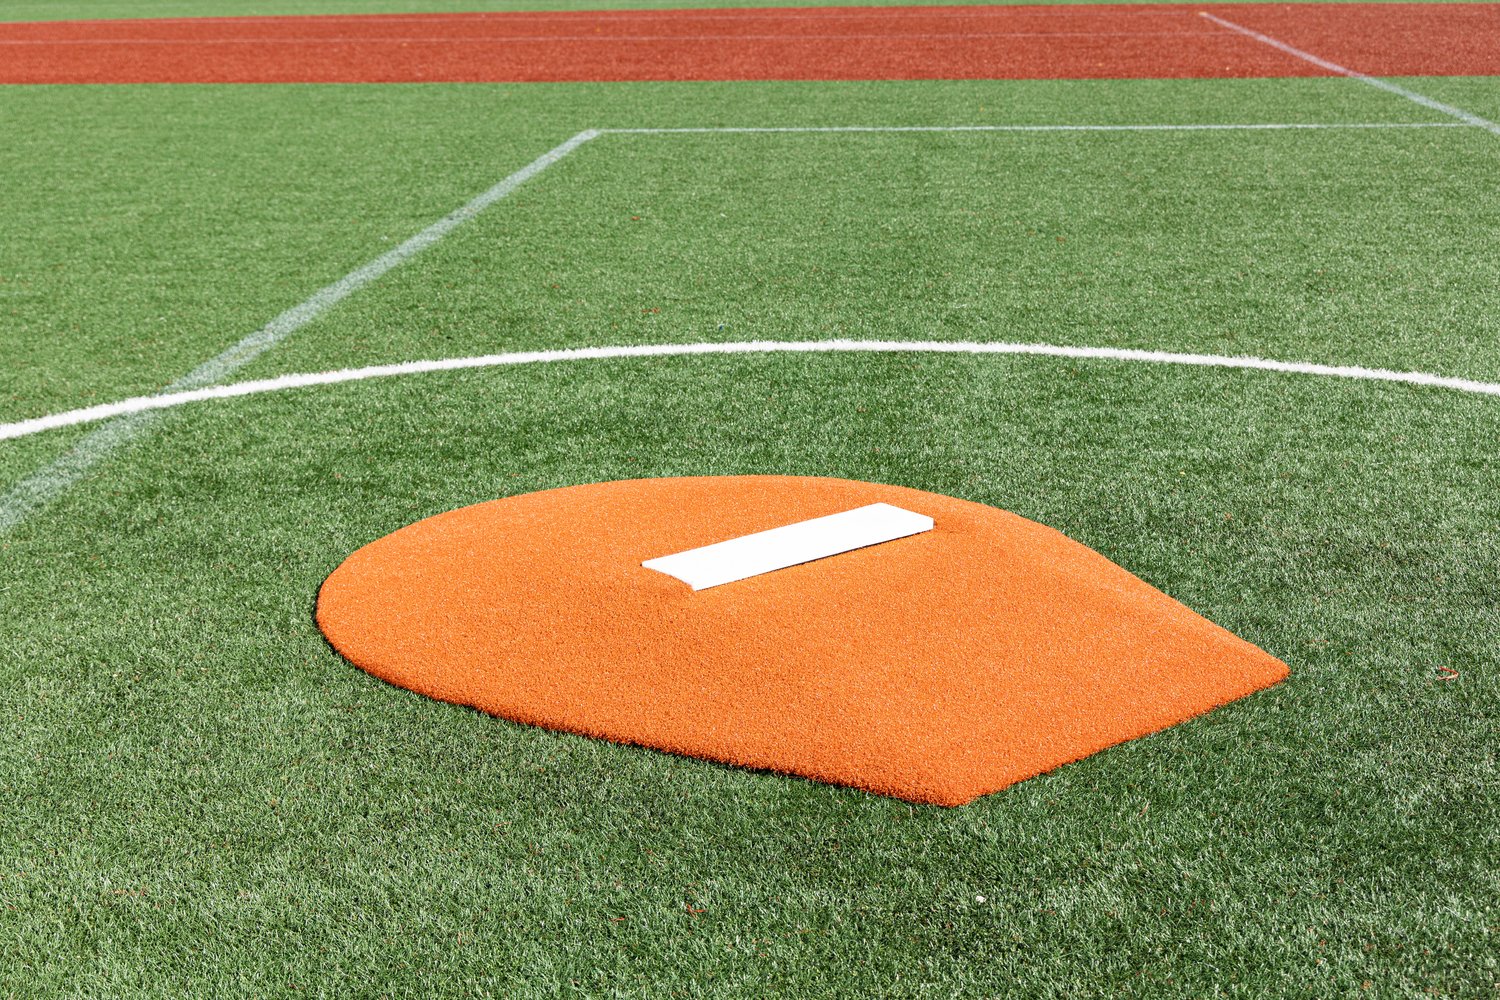 Fisher Athletic 6' x 7' 360 Pitching Target 360PT2 – Baseball Mound Supply